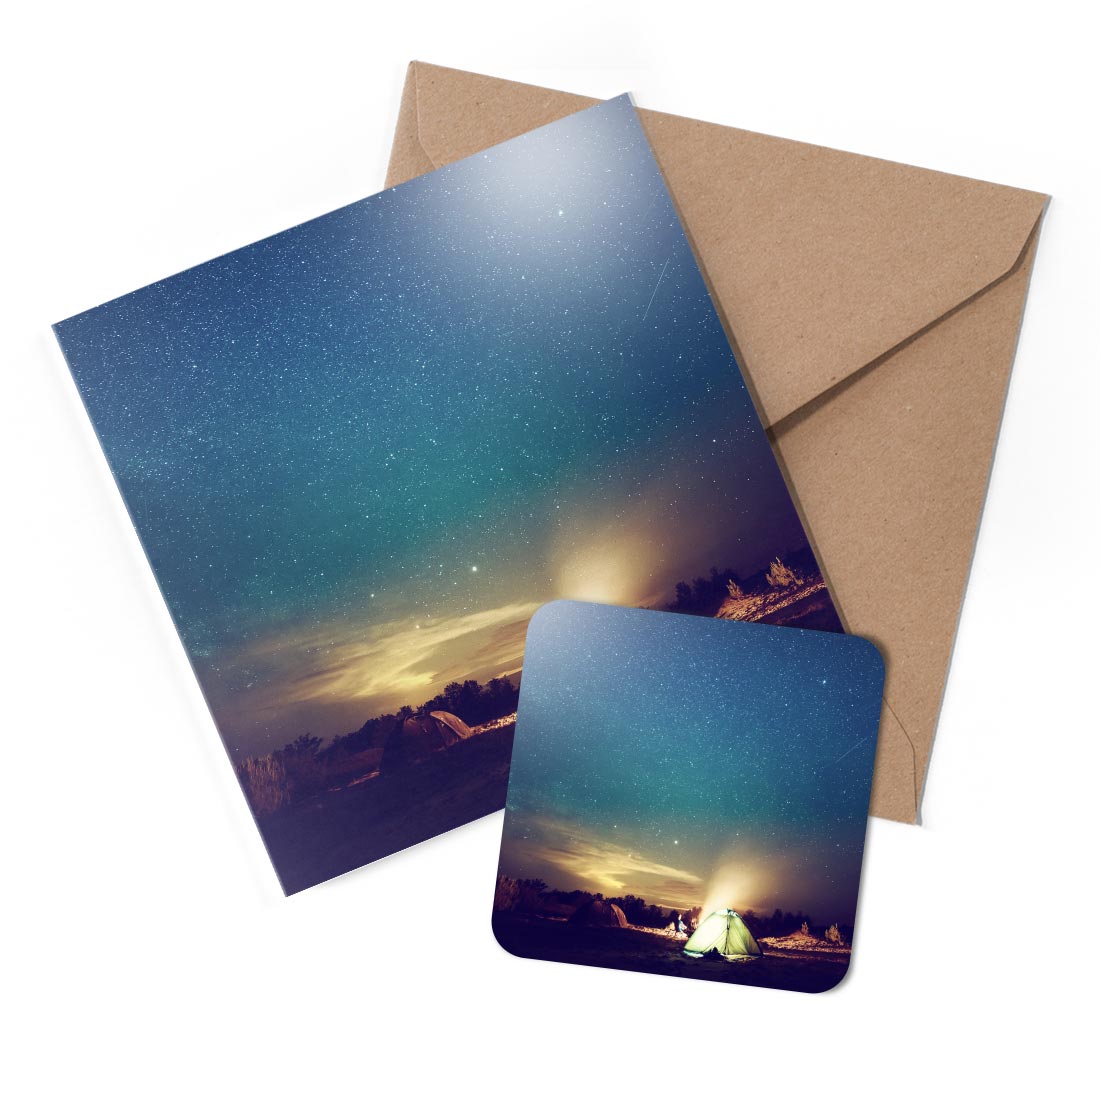 1 x Greeting Card & Coaster Set - Wild Camping Night Sky Stars Tent #52467